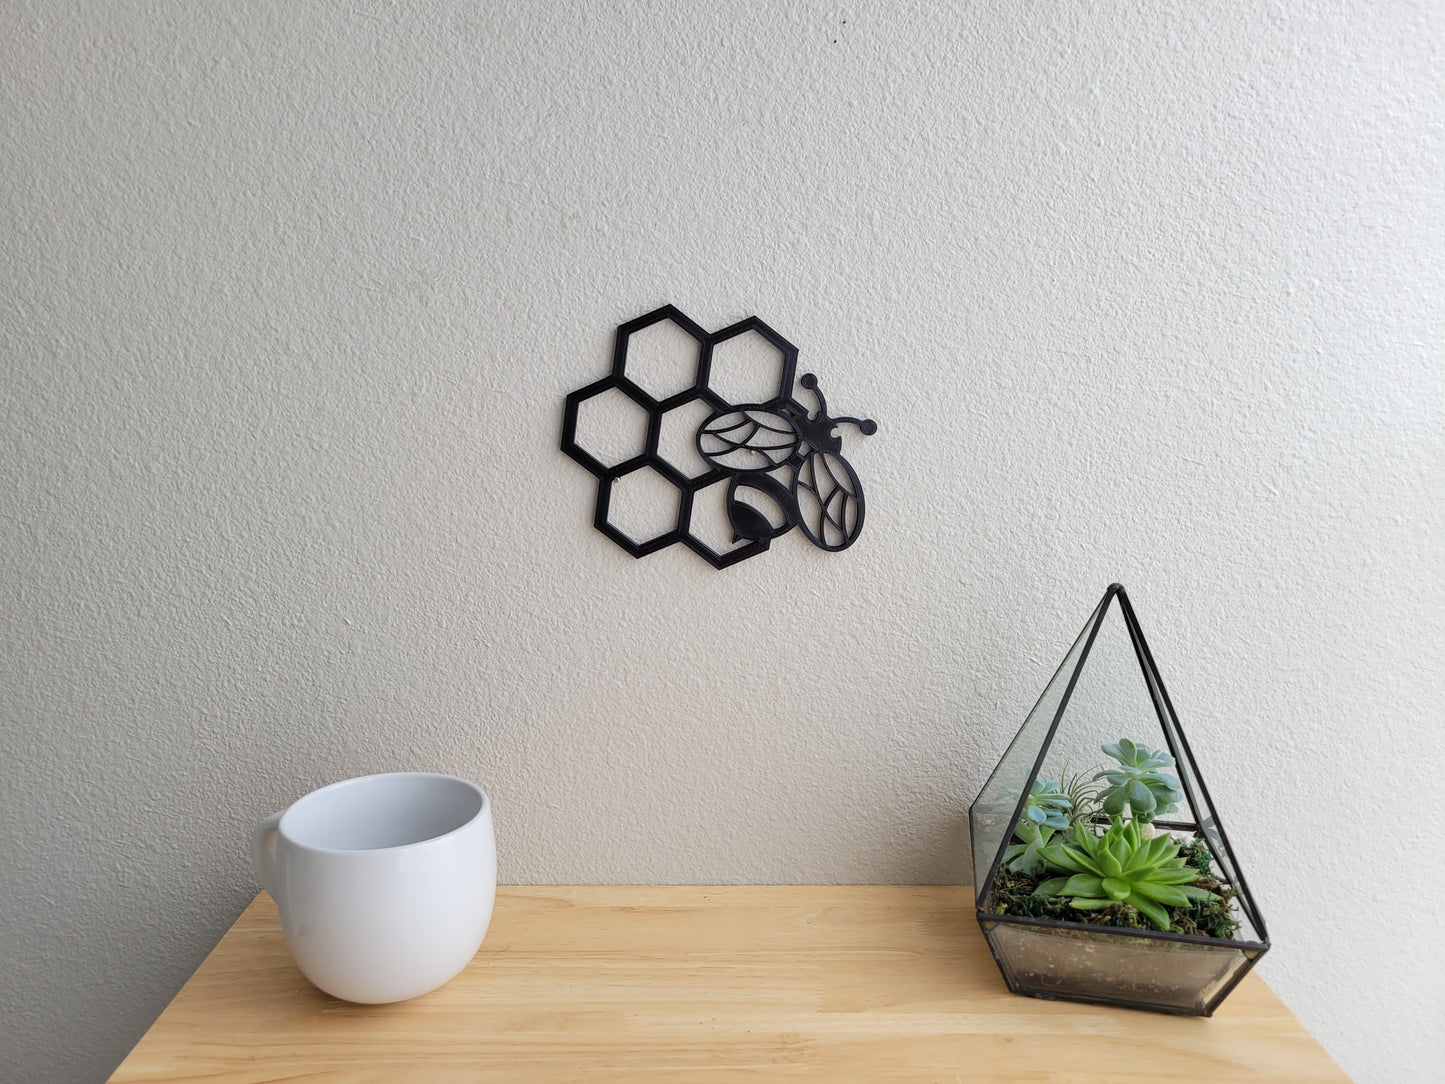 Bee Hive Honeycomb Wall Art